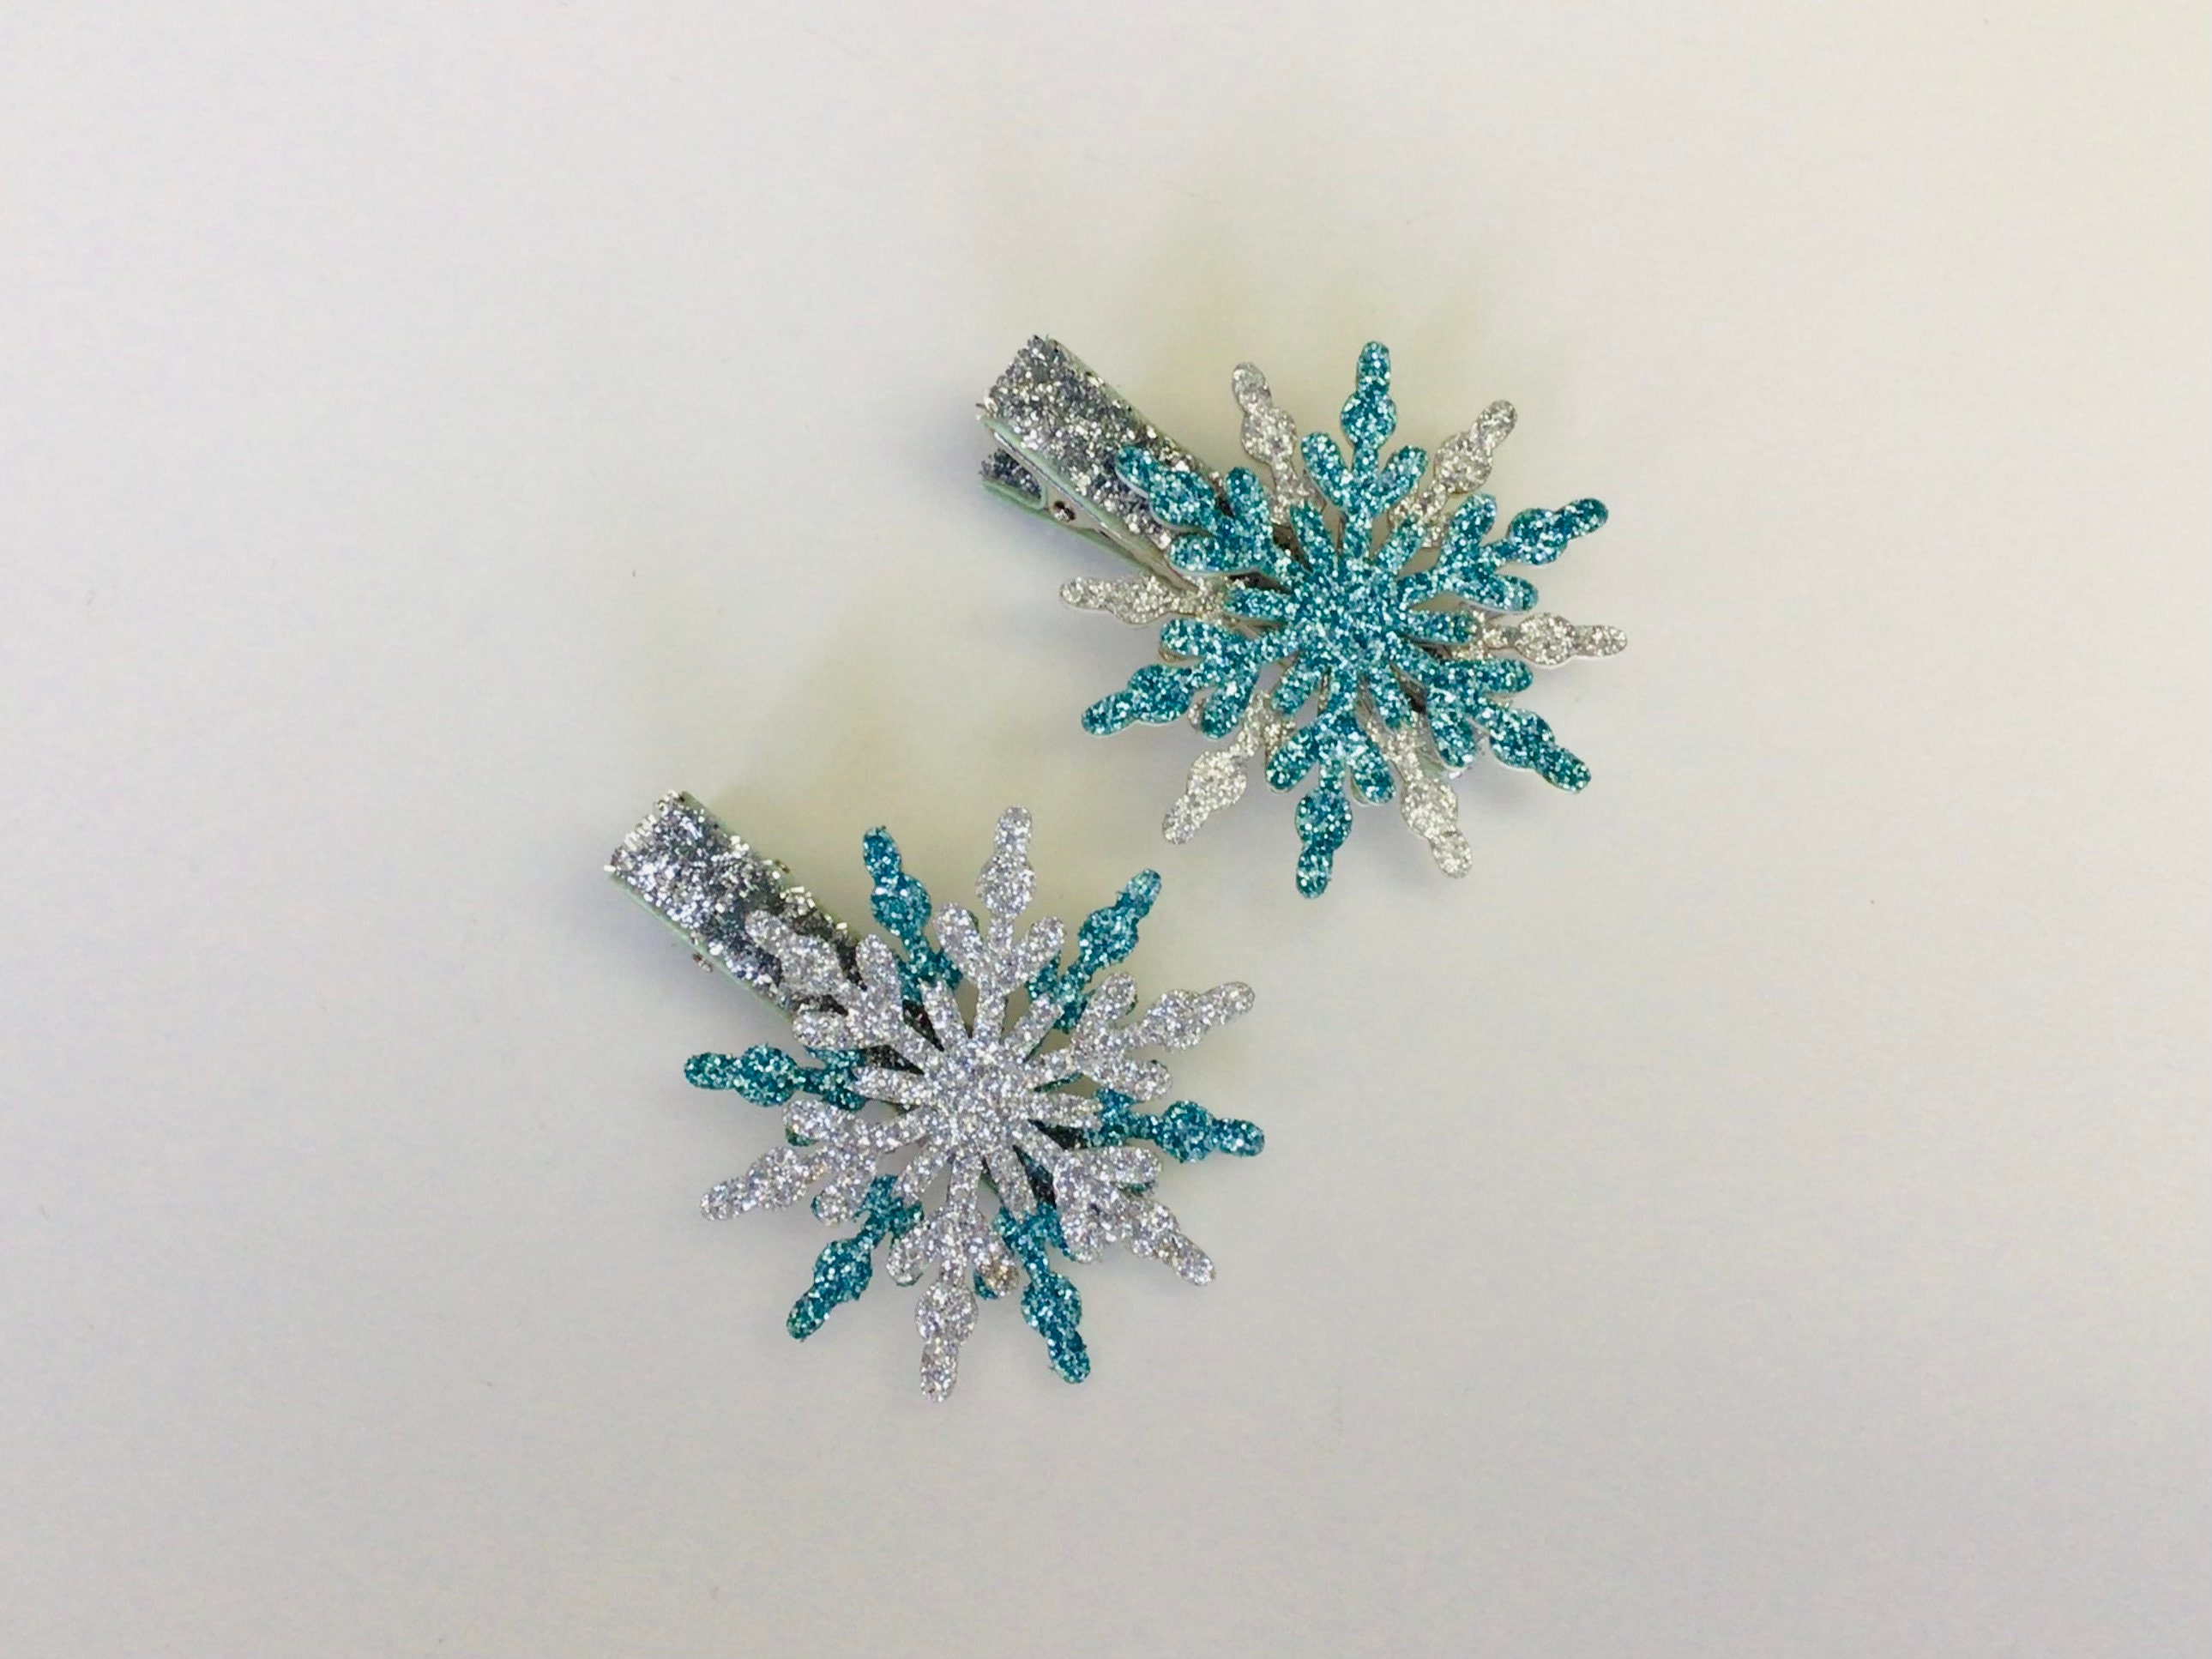 Glitter Snowflake Clip Art. Sparkle Christmas Snowflakes. Frozen, Snow,  Snowflake Clipart in Mint, Blue, Purple Glitter. Christmas Images. 